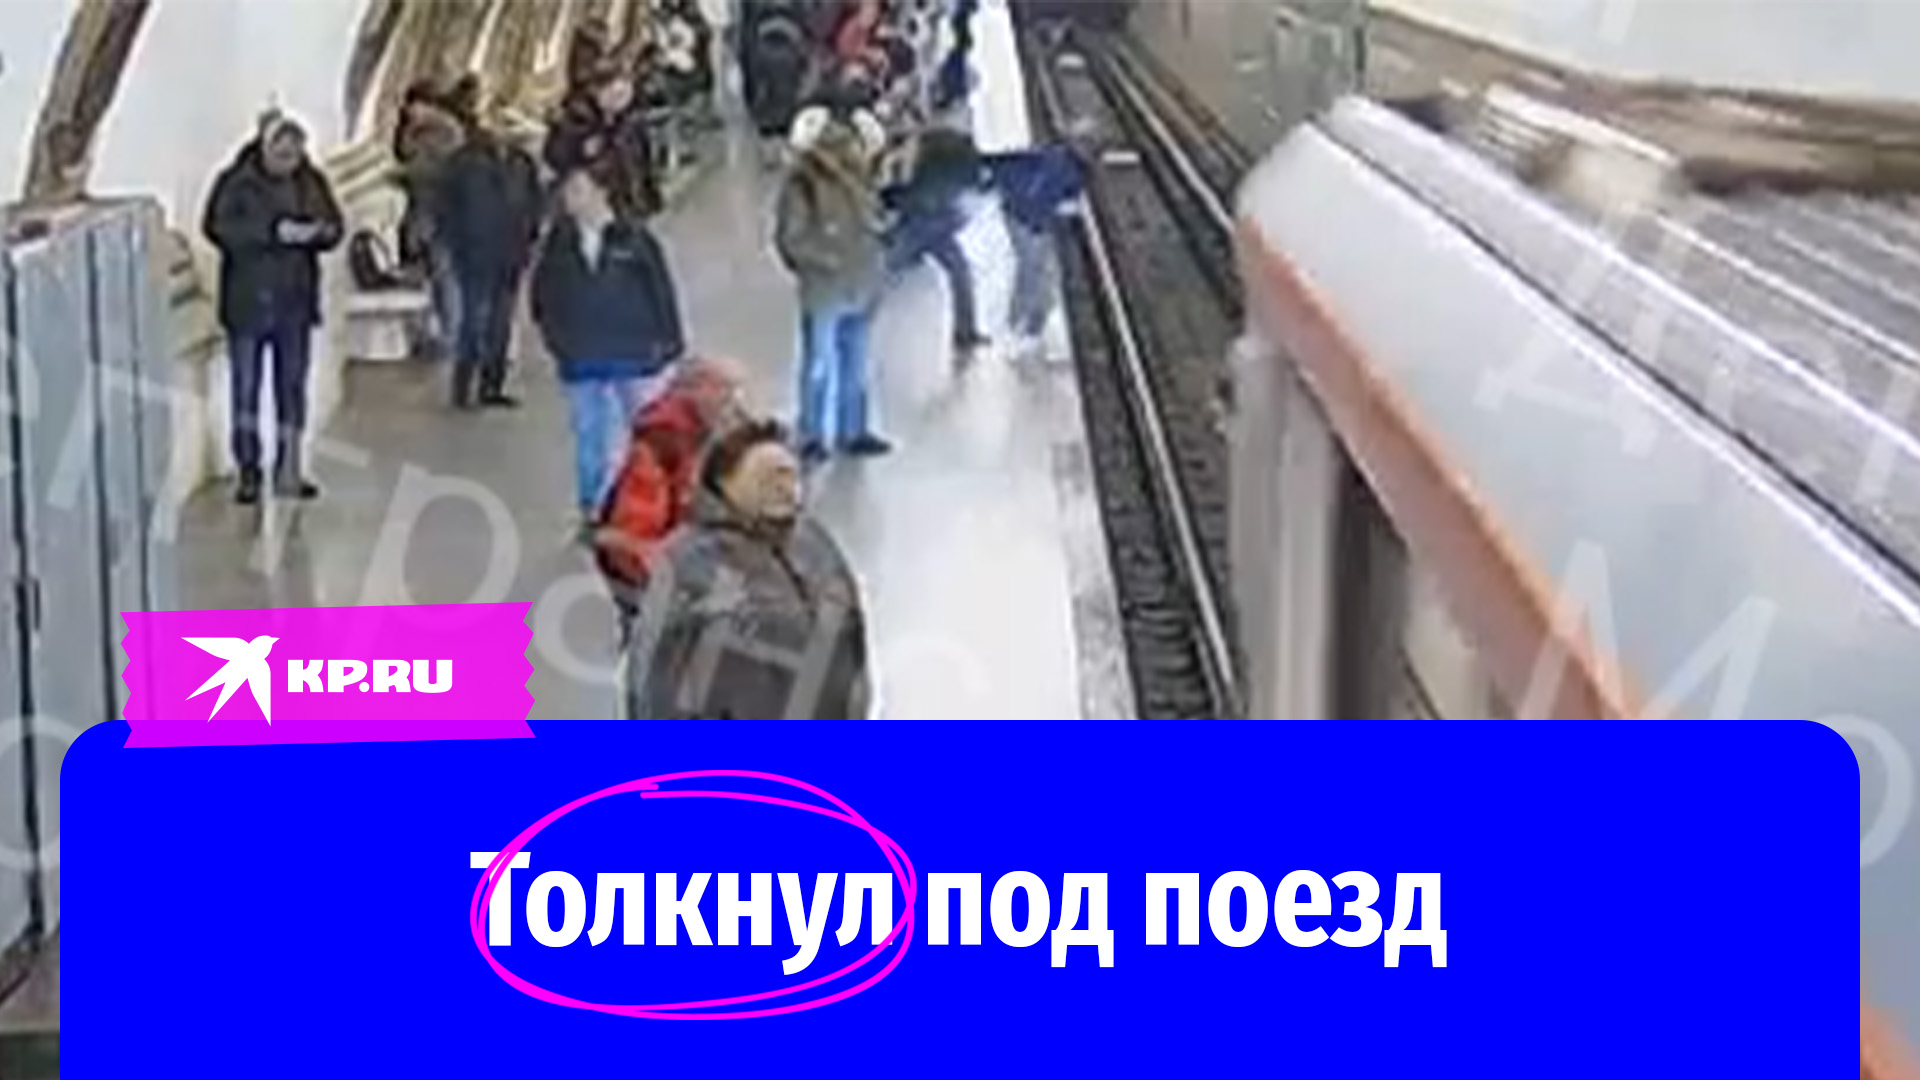 Мужчина толкнул под поезд. Столкнул под поезд в метро. Мужчина столкнул в метро. Мальчика толкнули в метро.